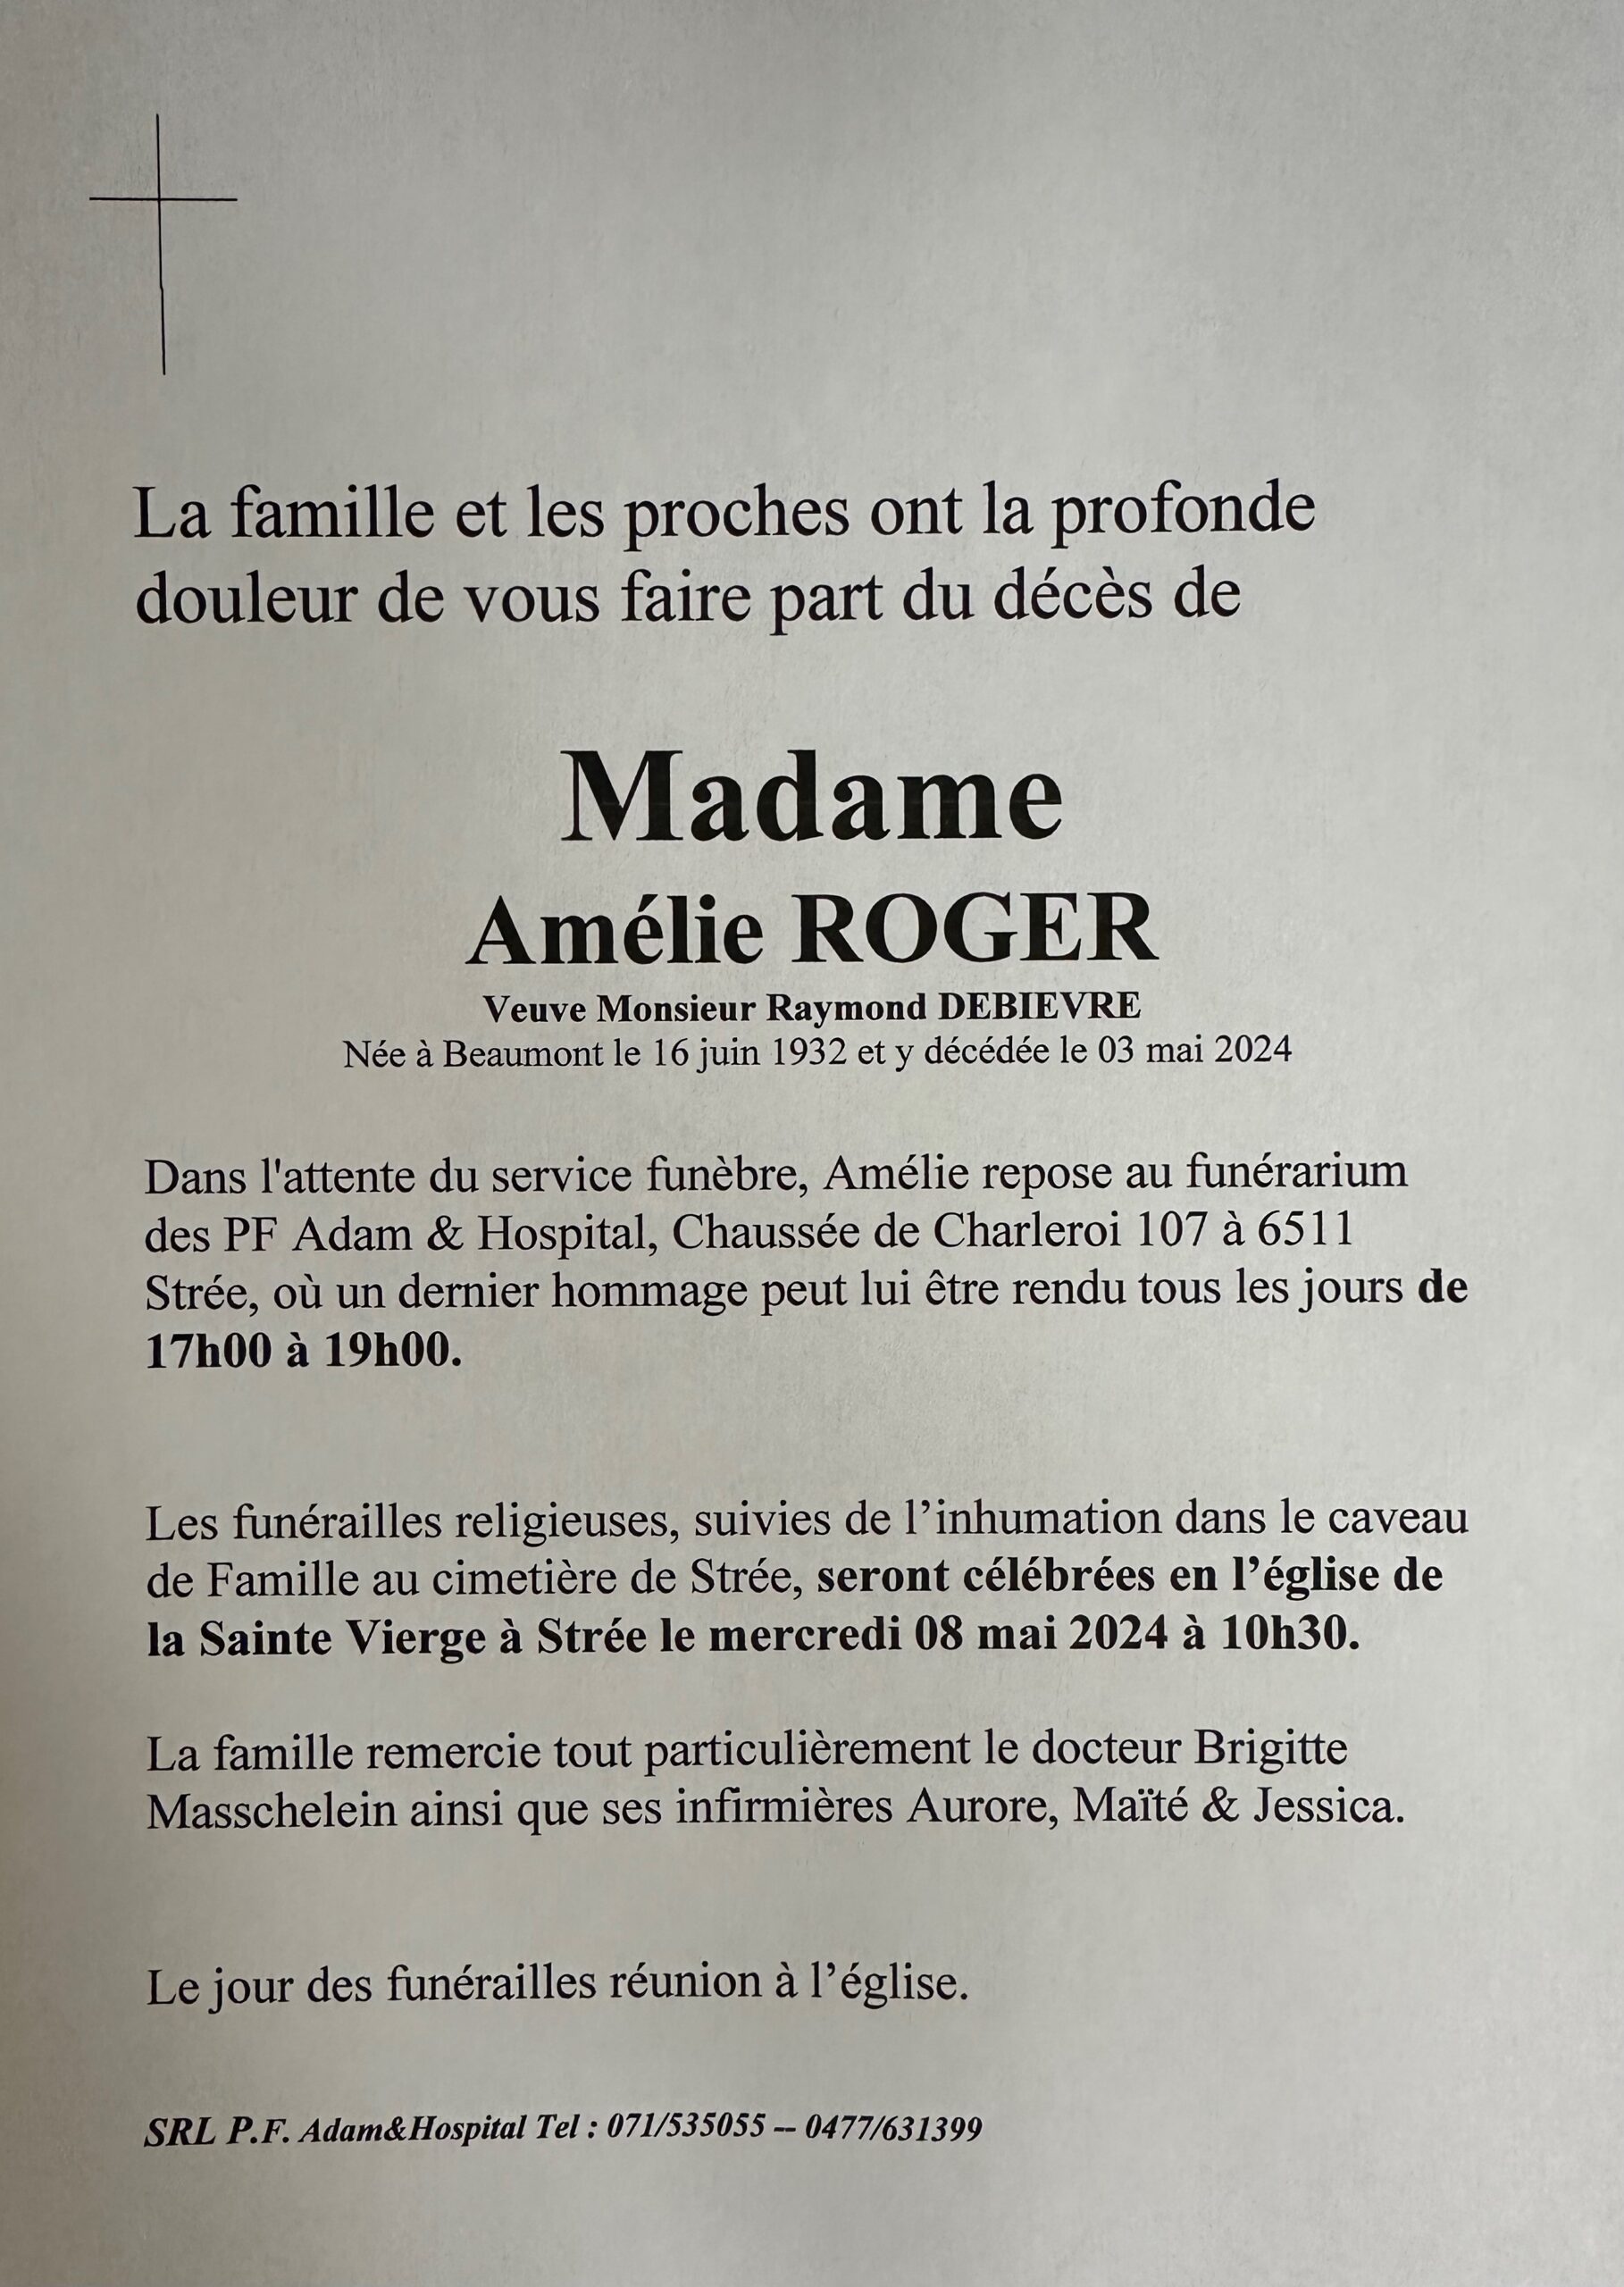 Amelie ROGER scaled | Funérailles Adam Hospital